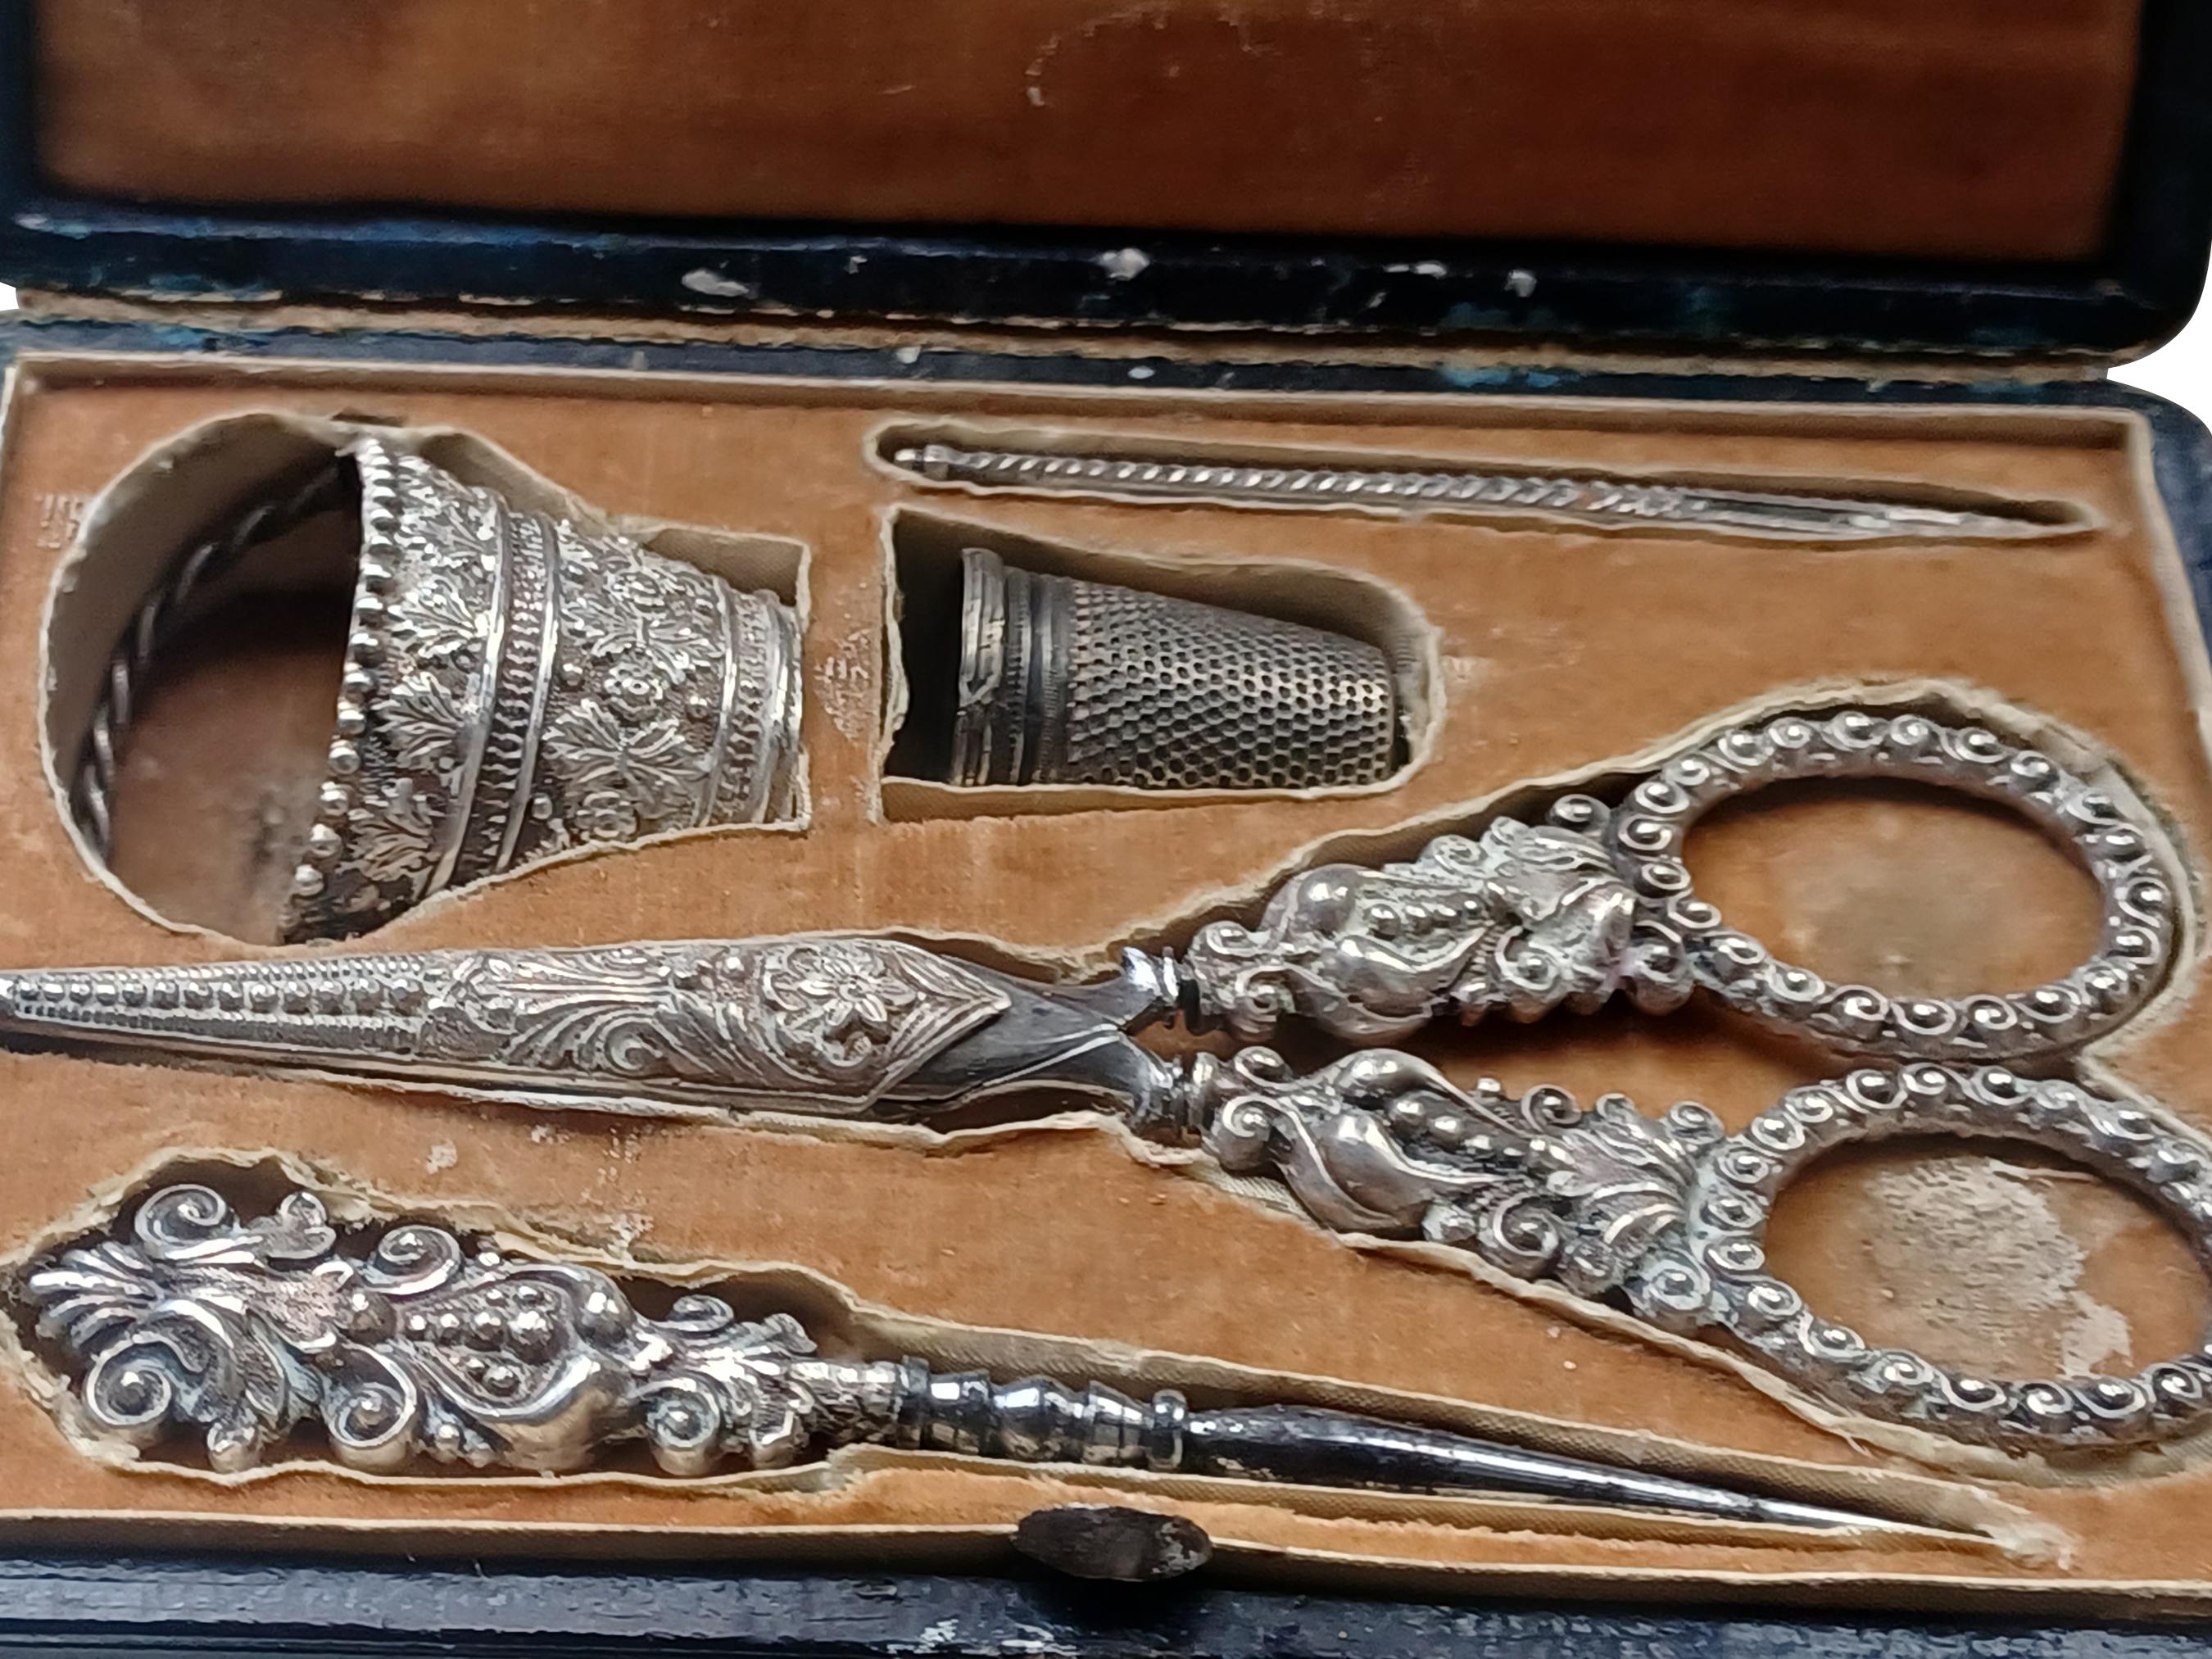 Rare Antique George IV Lady’s Sewing Necessaire with Original Case, est. 1825 For Sale 6